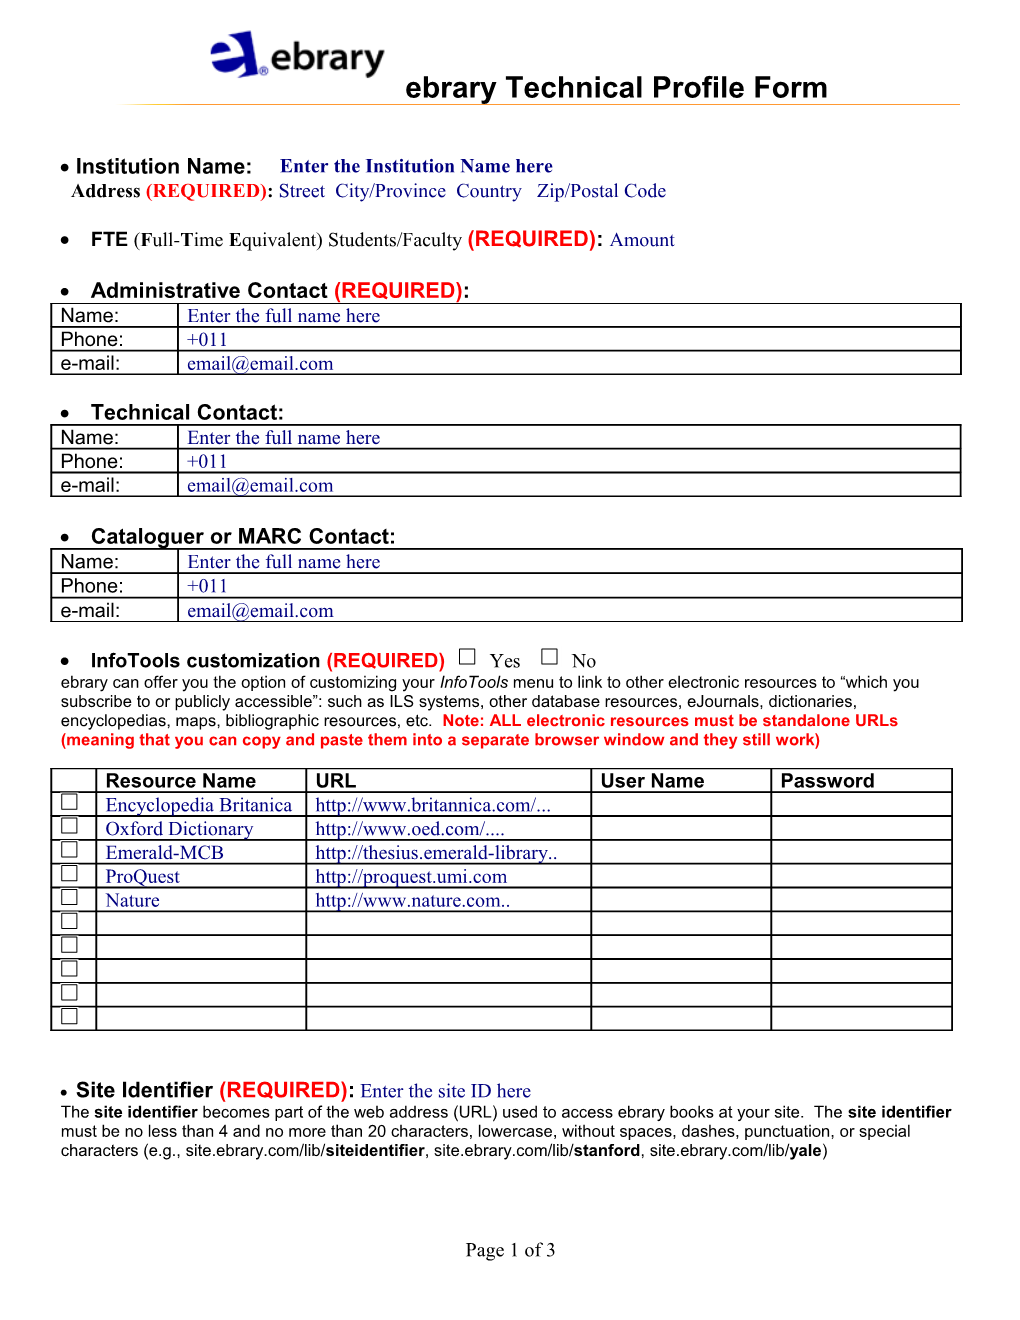 Ebrary Technical Profile Form